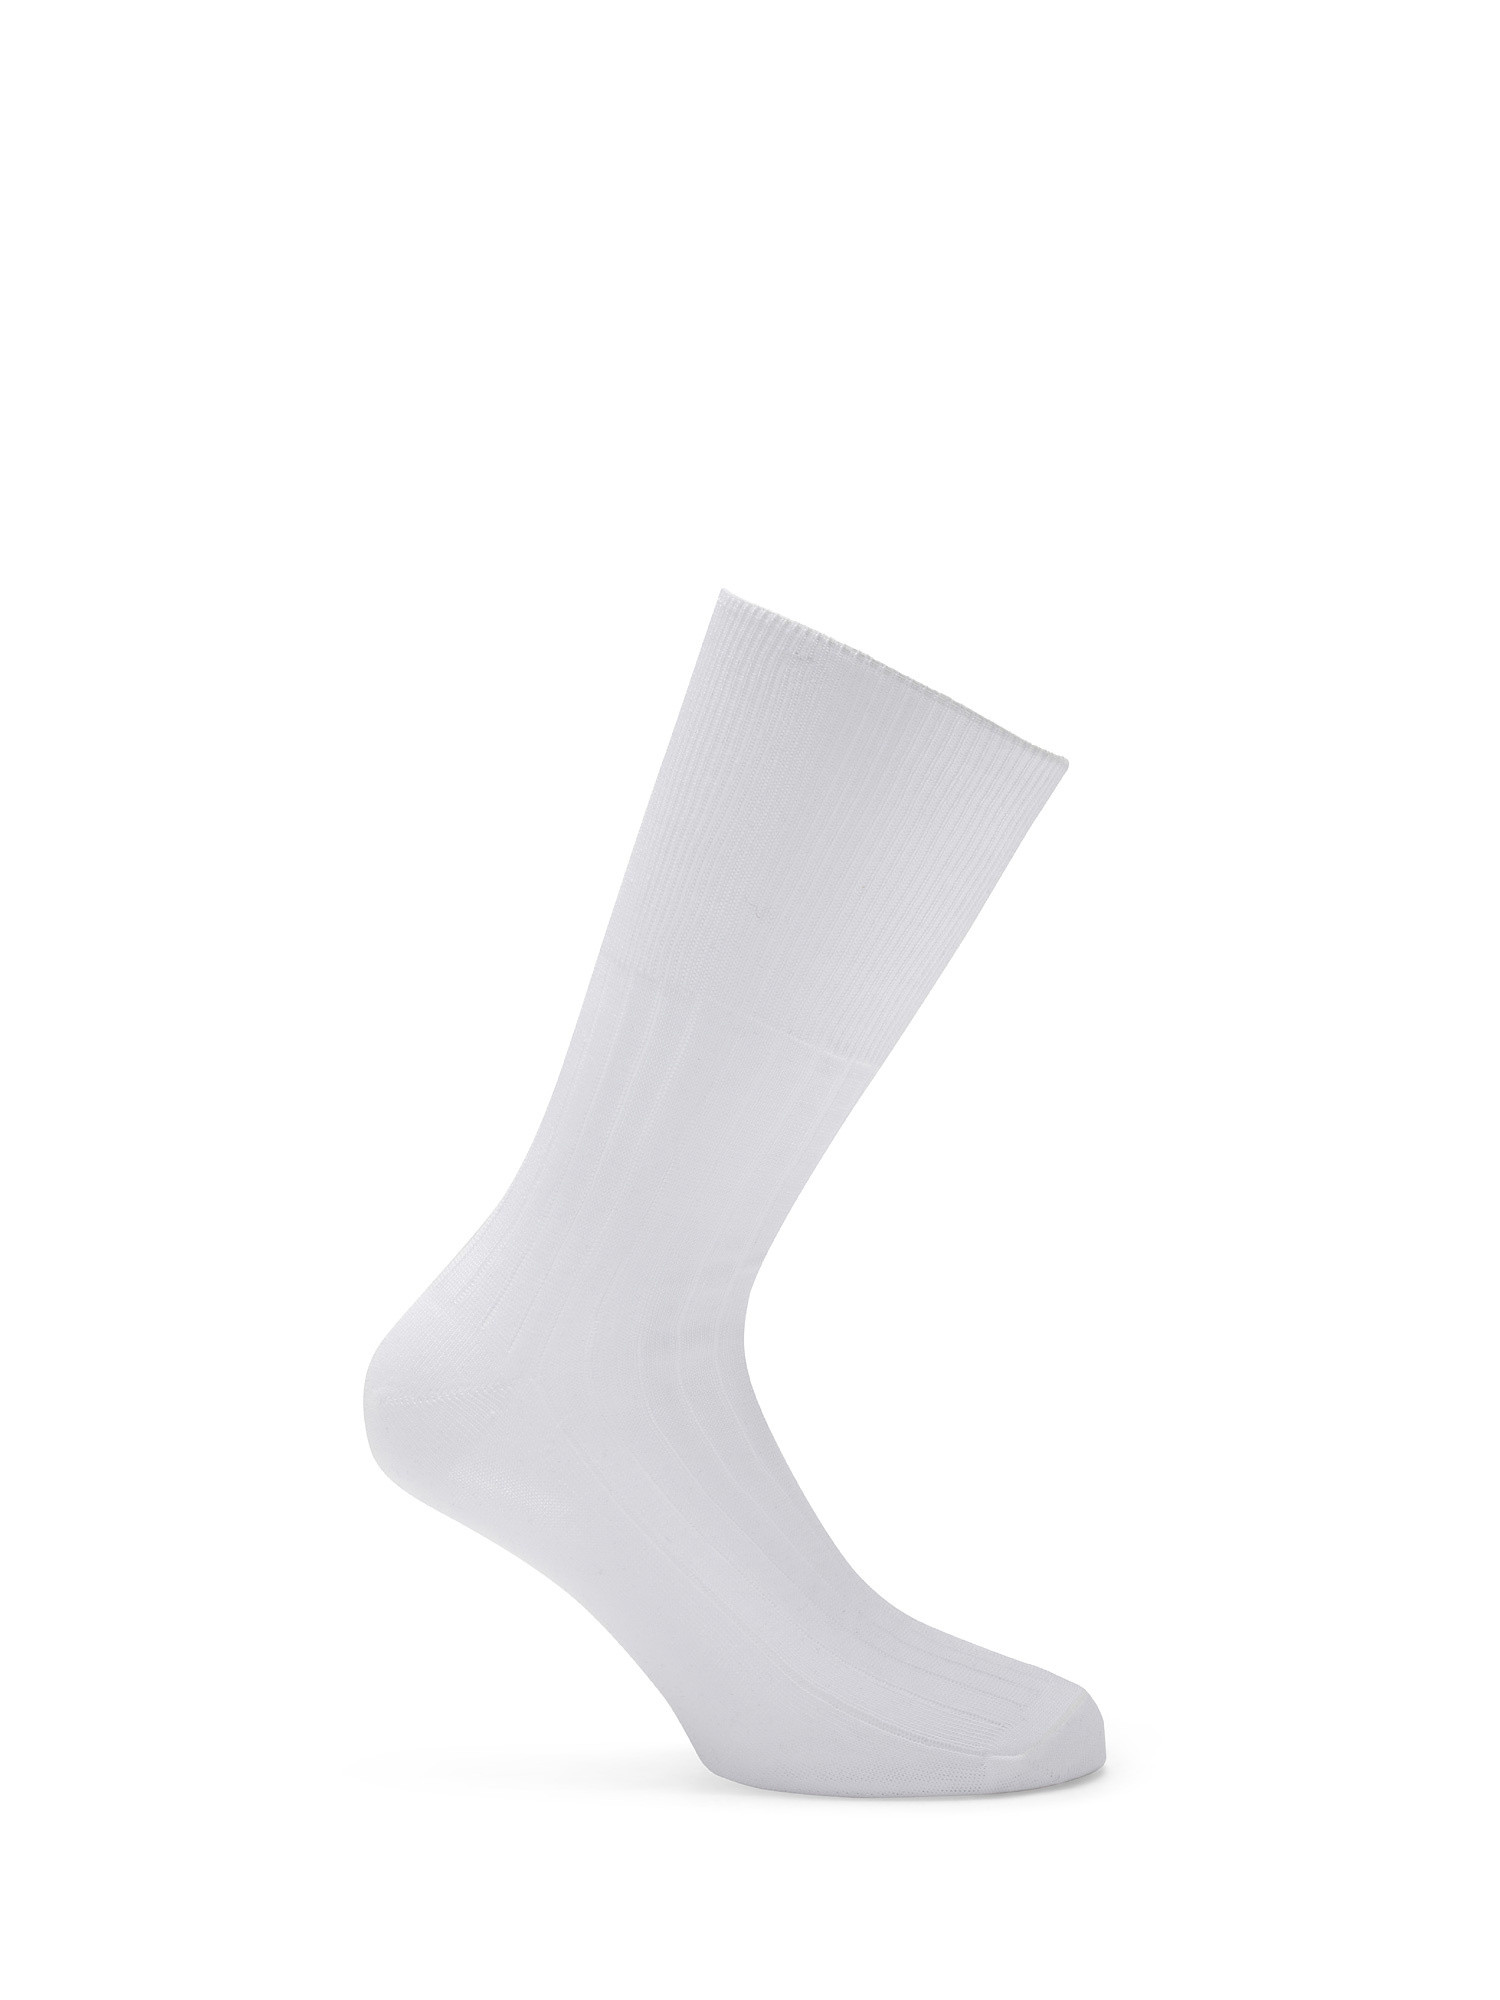 Solid color cotton sanitary short socks, White, large image number 1